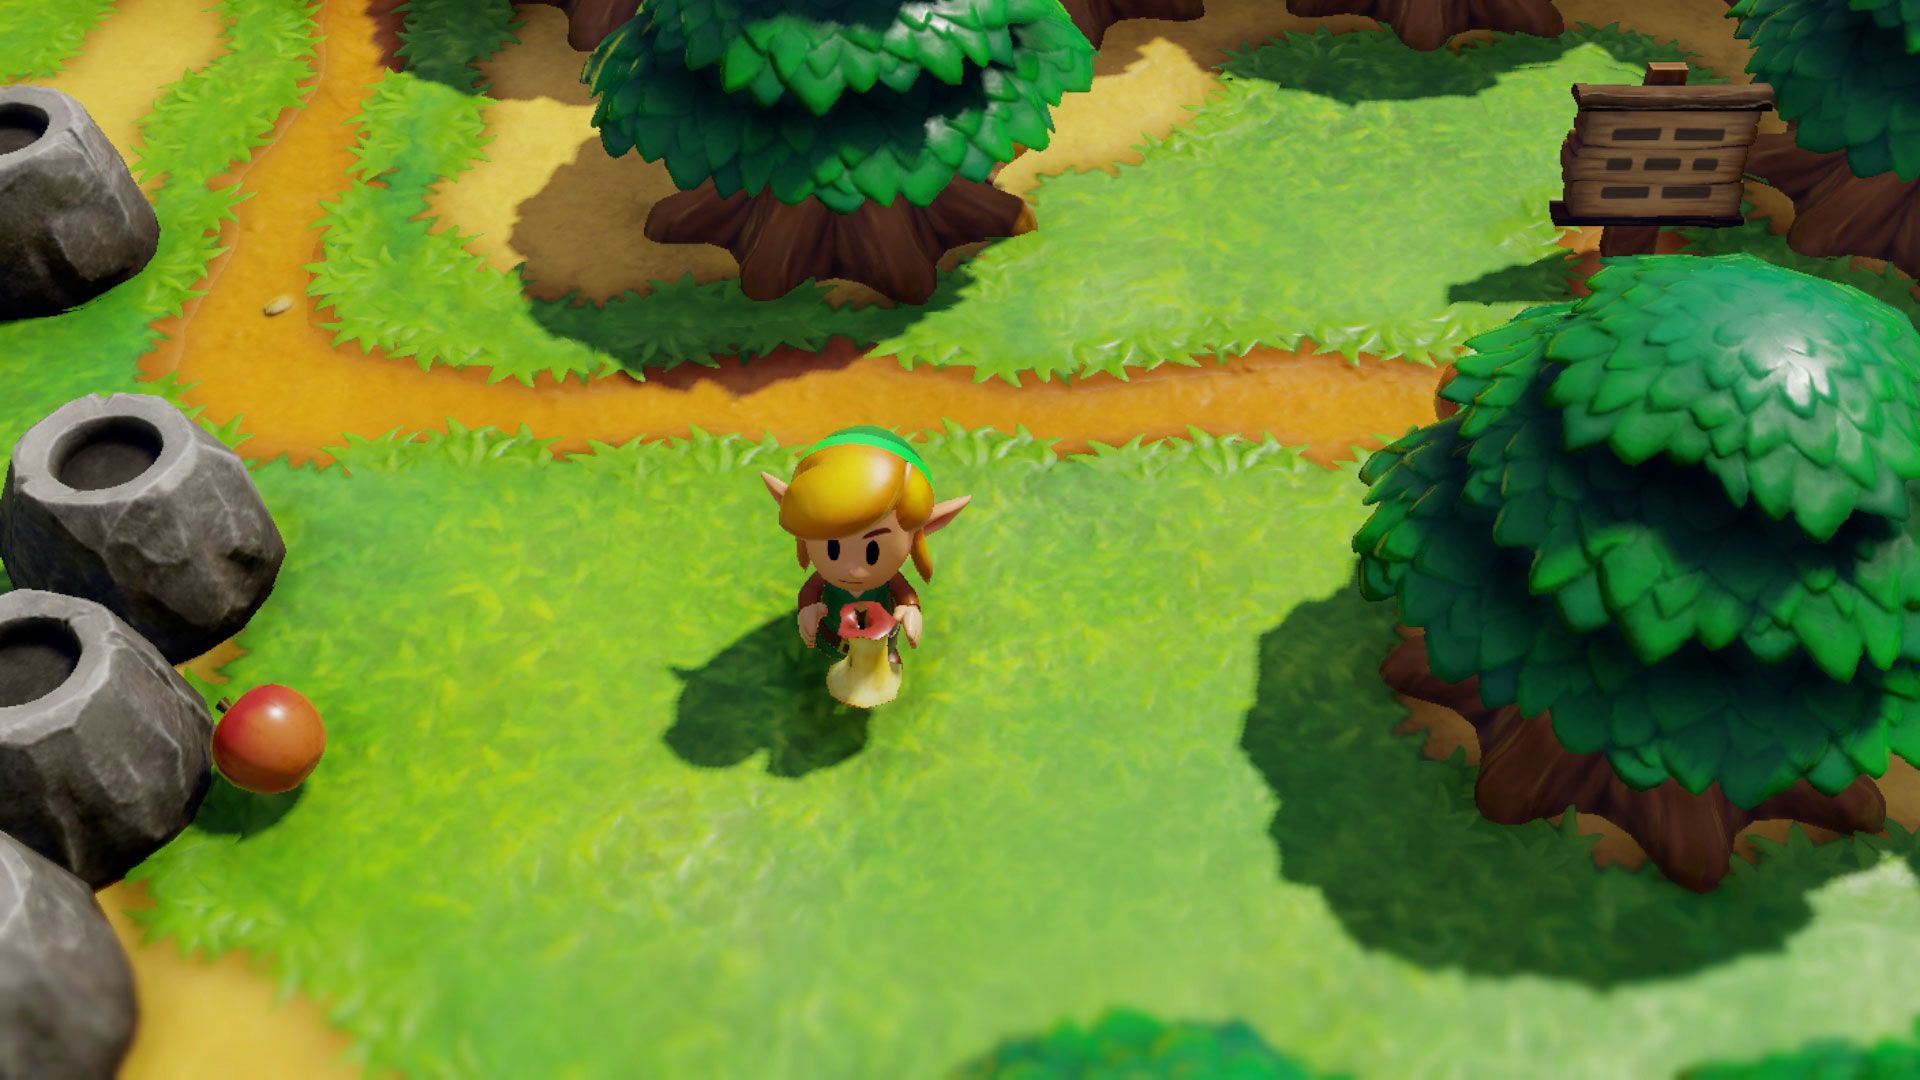 The Legend of Zelda: Link's Awakening (Switch) - Buy Nintendo Game Key